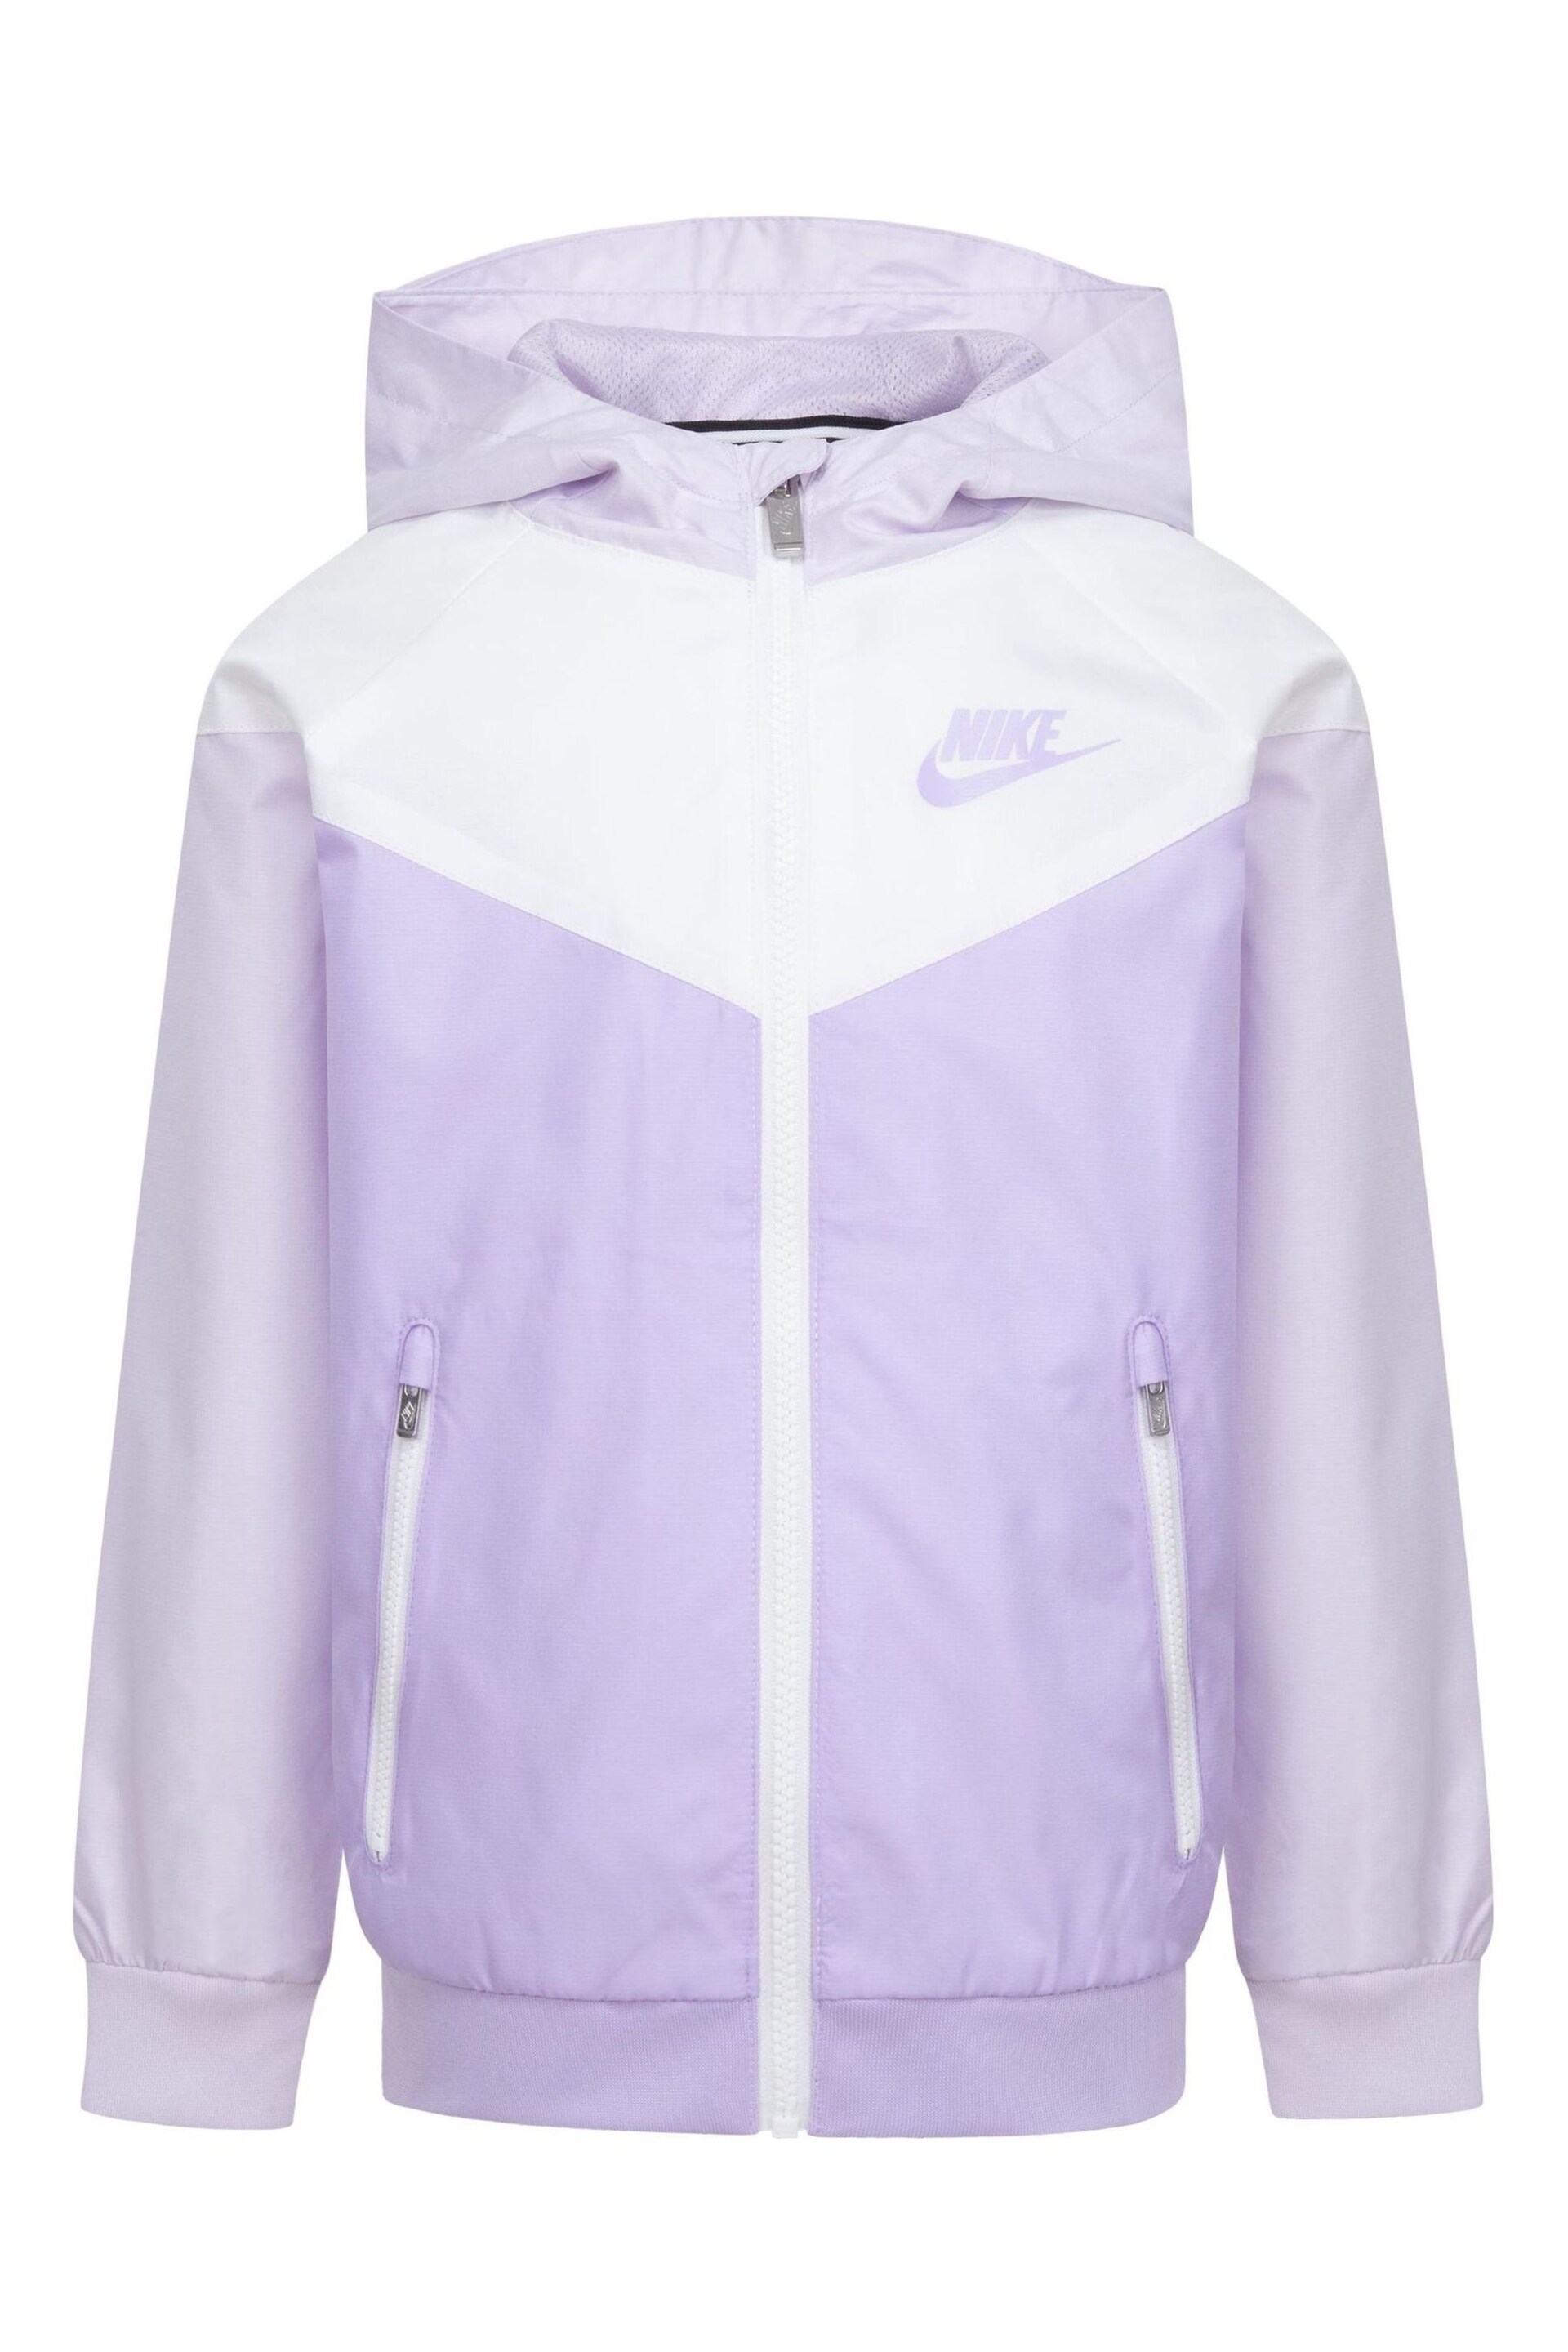 Nike Purple Little Kids Wind Runner Jacket - Image 1 of 3